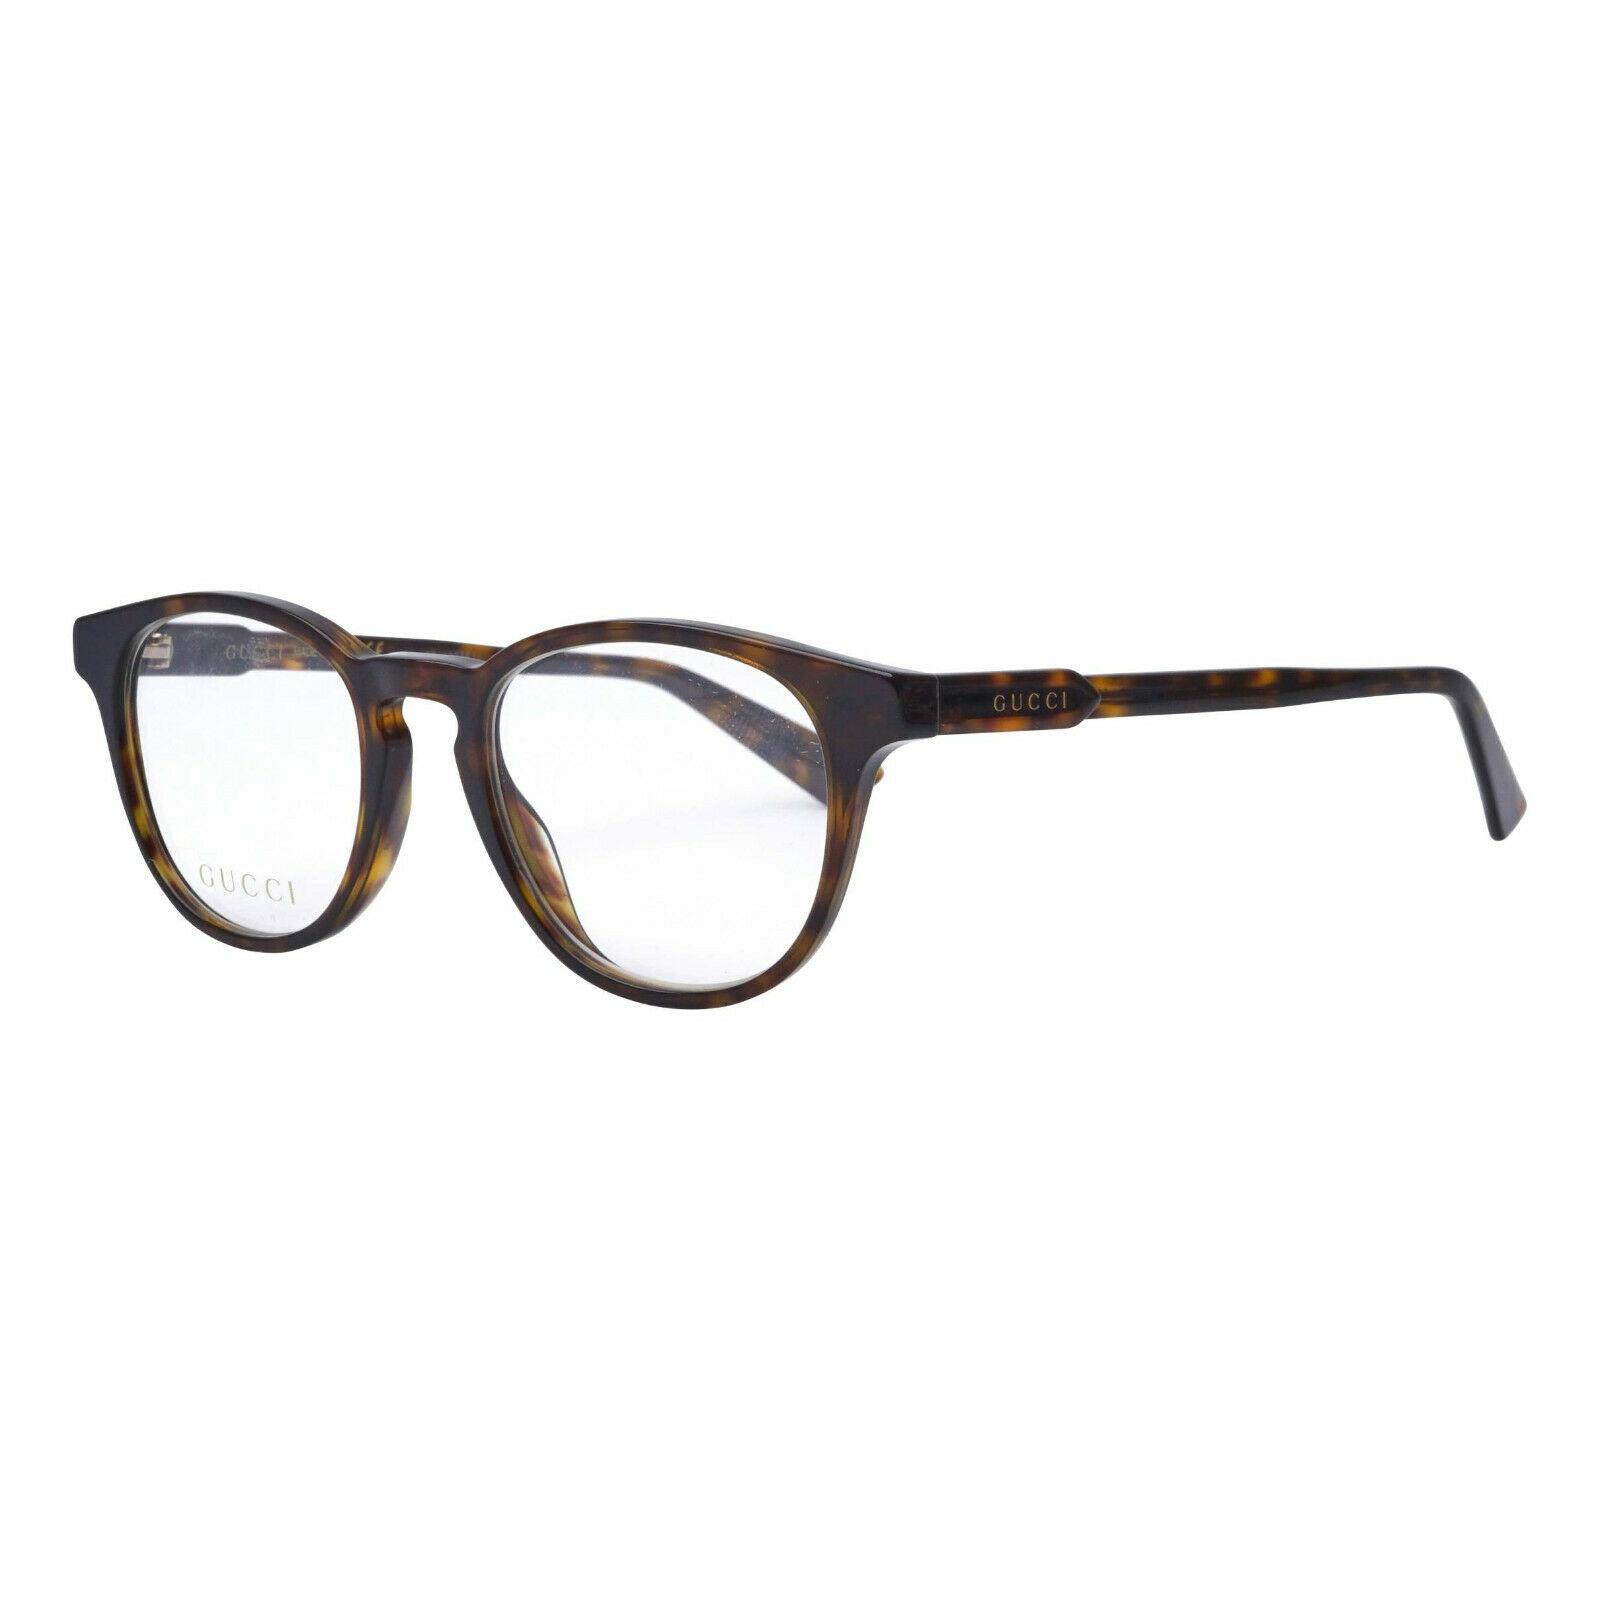 Gucci GG0491O 002 Tortoise Frame Eyeglasses | 889652845364 - Gucci ...